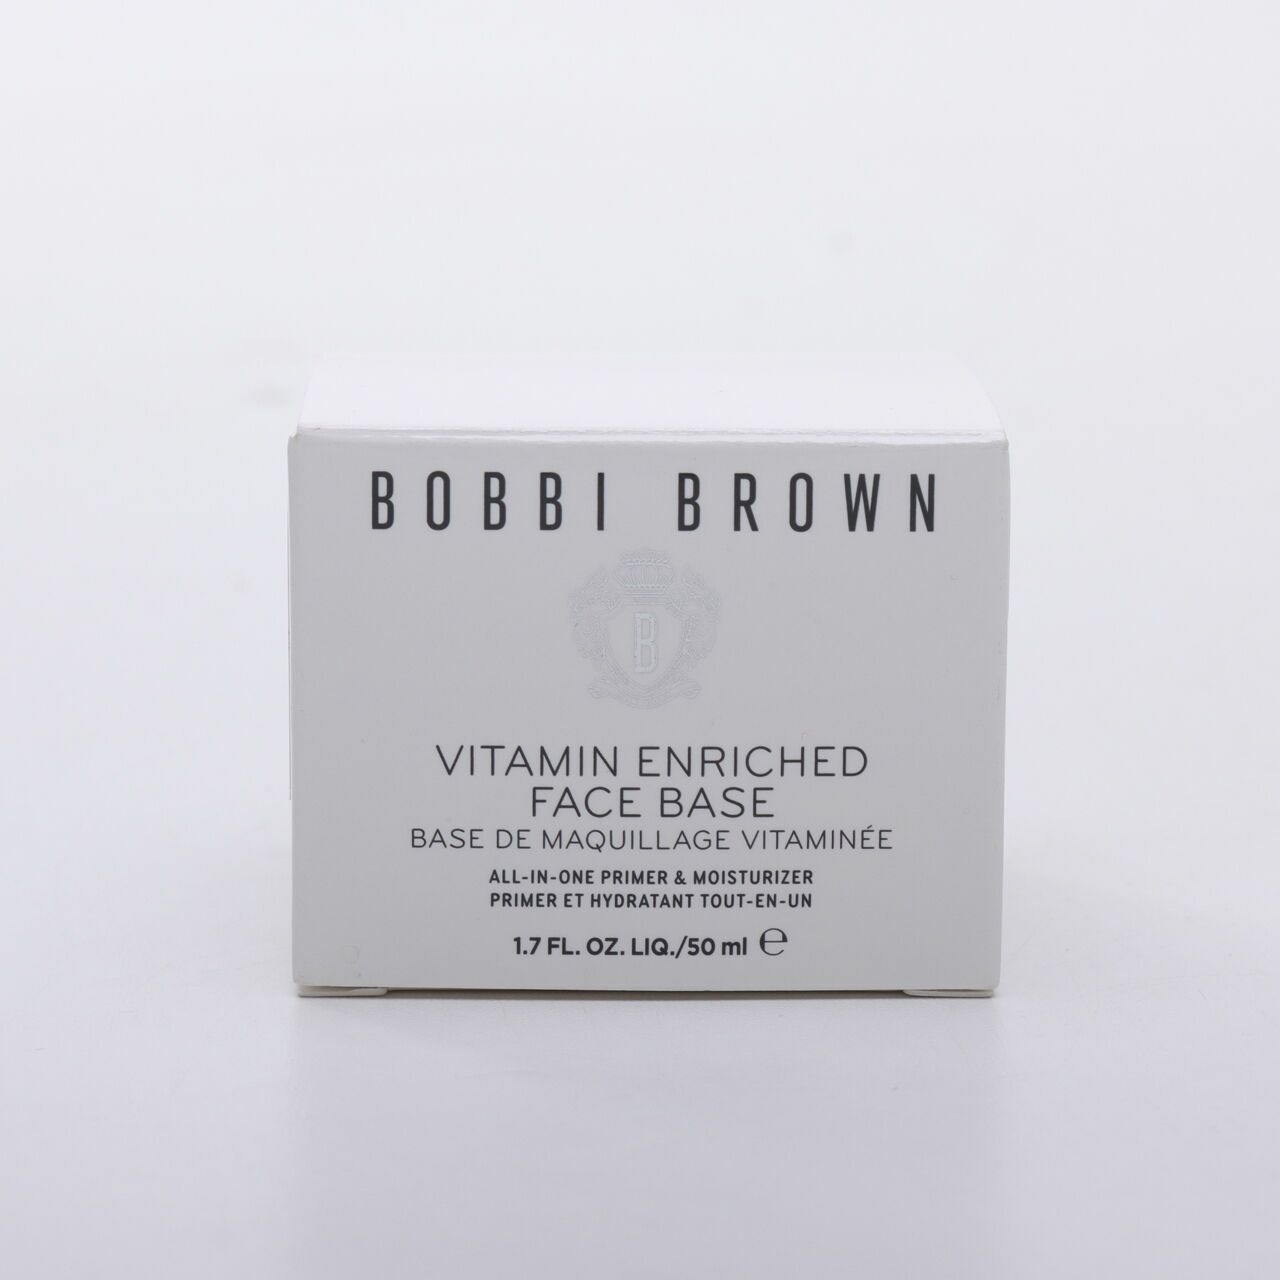 Bobbi Brown Vitamin Enriched Face Base All-in-one Primer&Moisturizer Faces